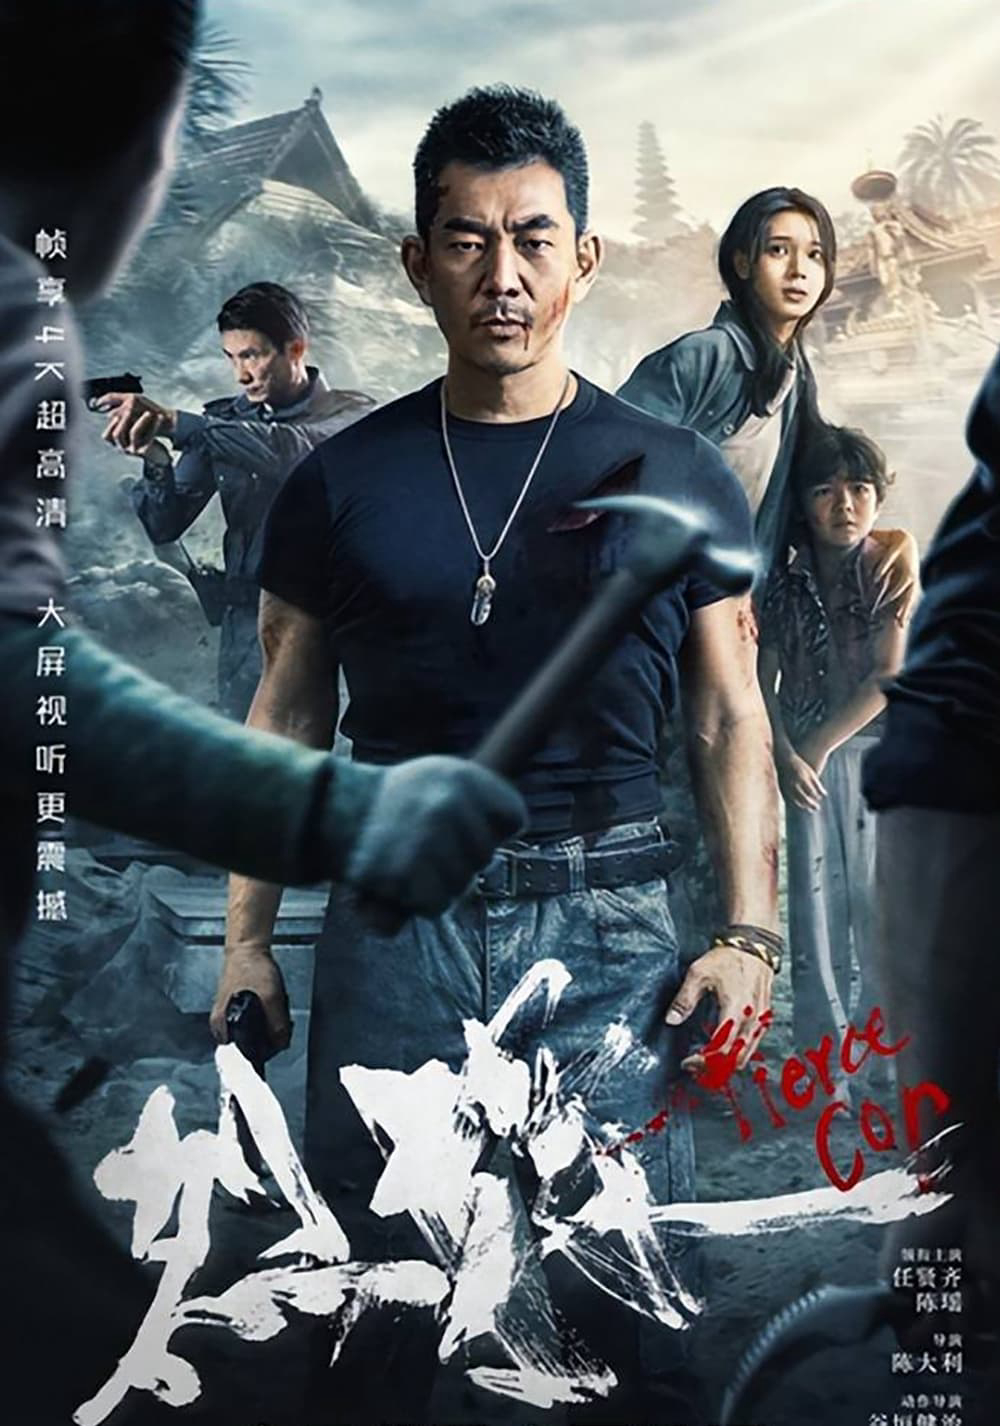 Poster Phim Liệt Tấn (Fierce Cop)